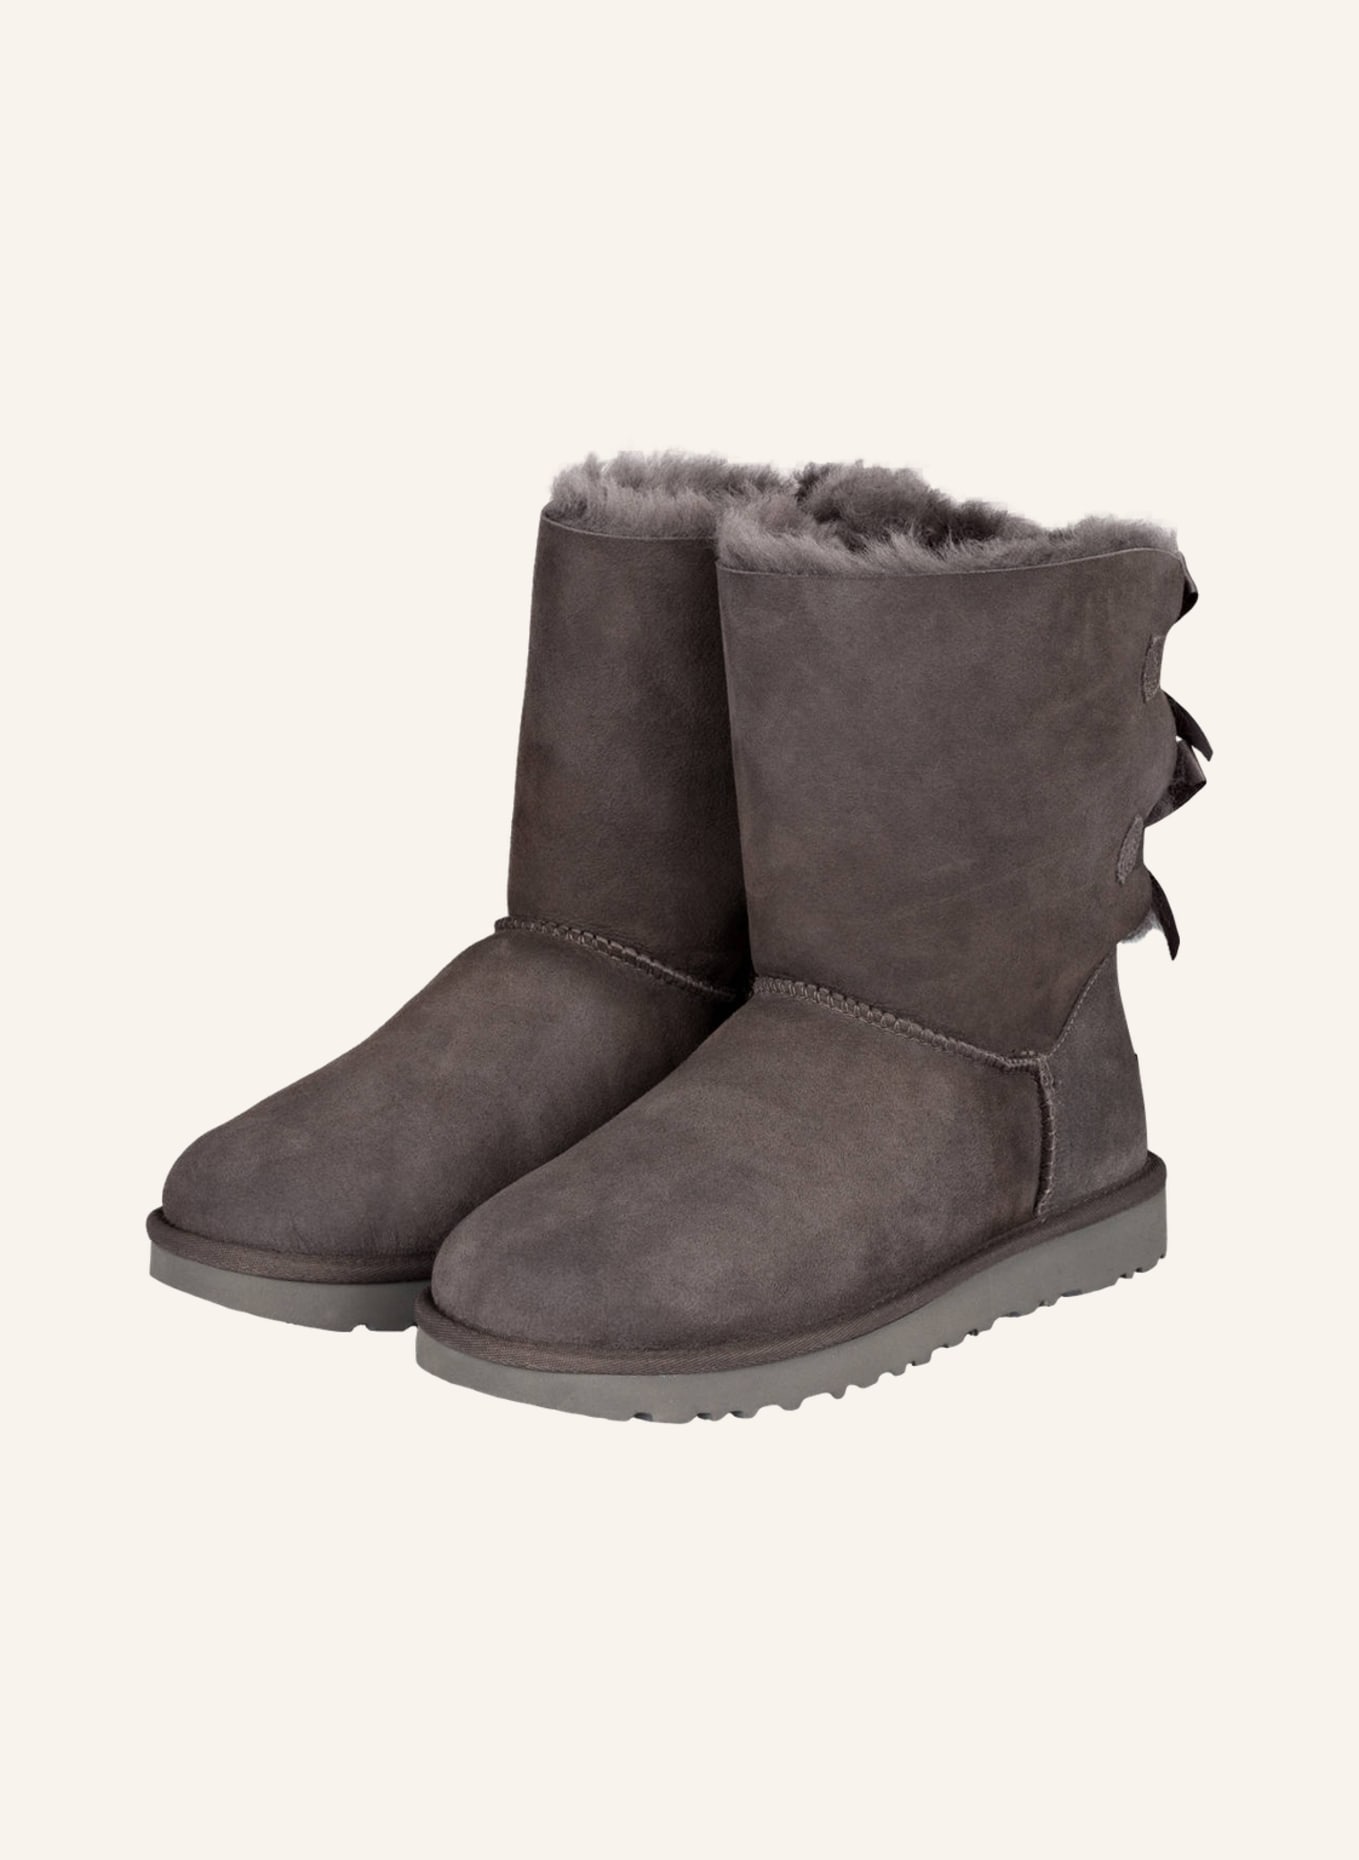 UGG MINI BAILEY BOW - Winter boots - slate/brown - Zalando.de